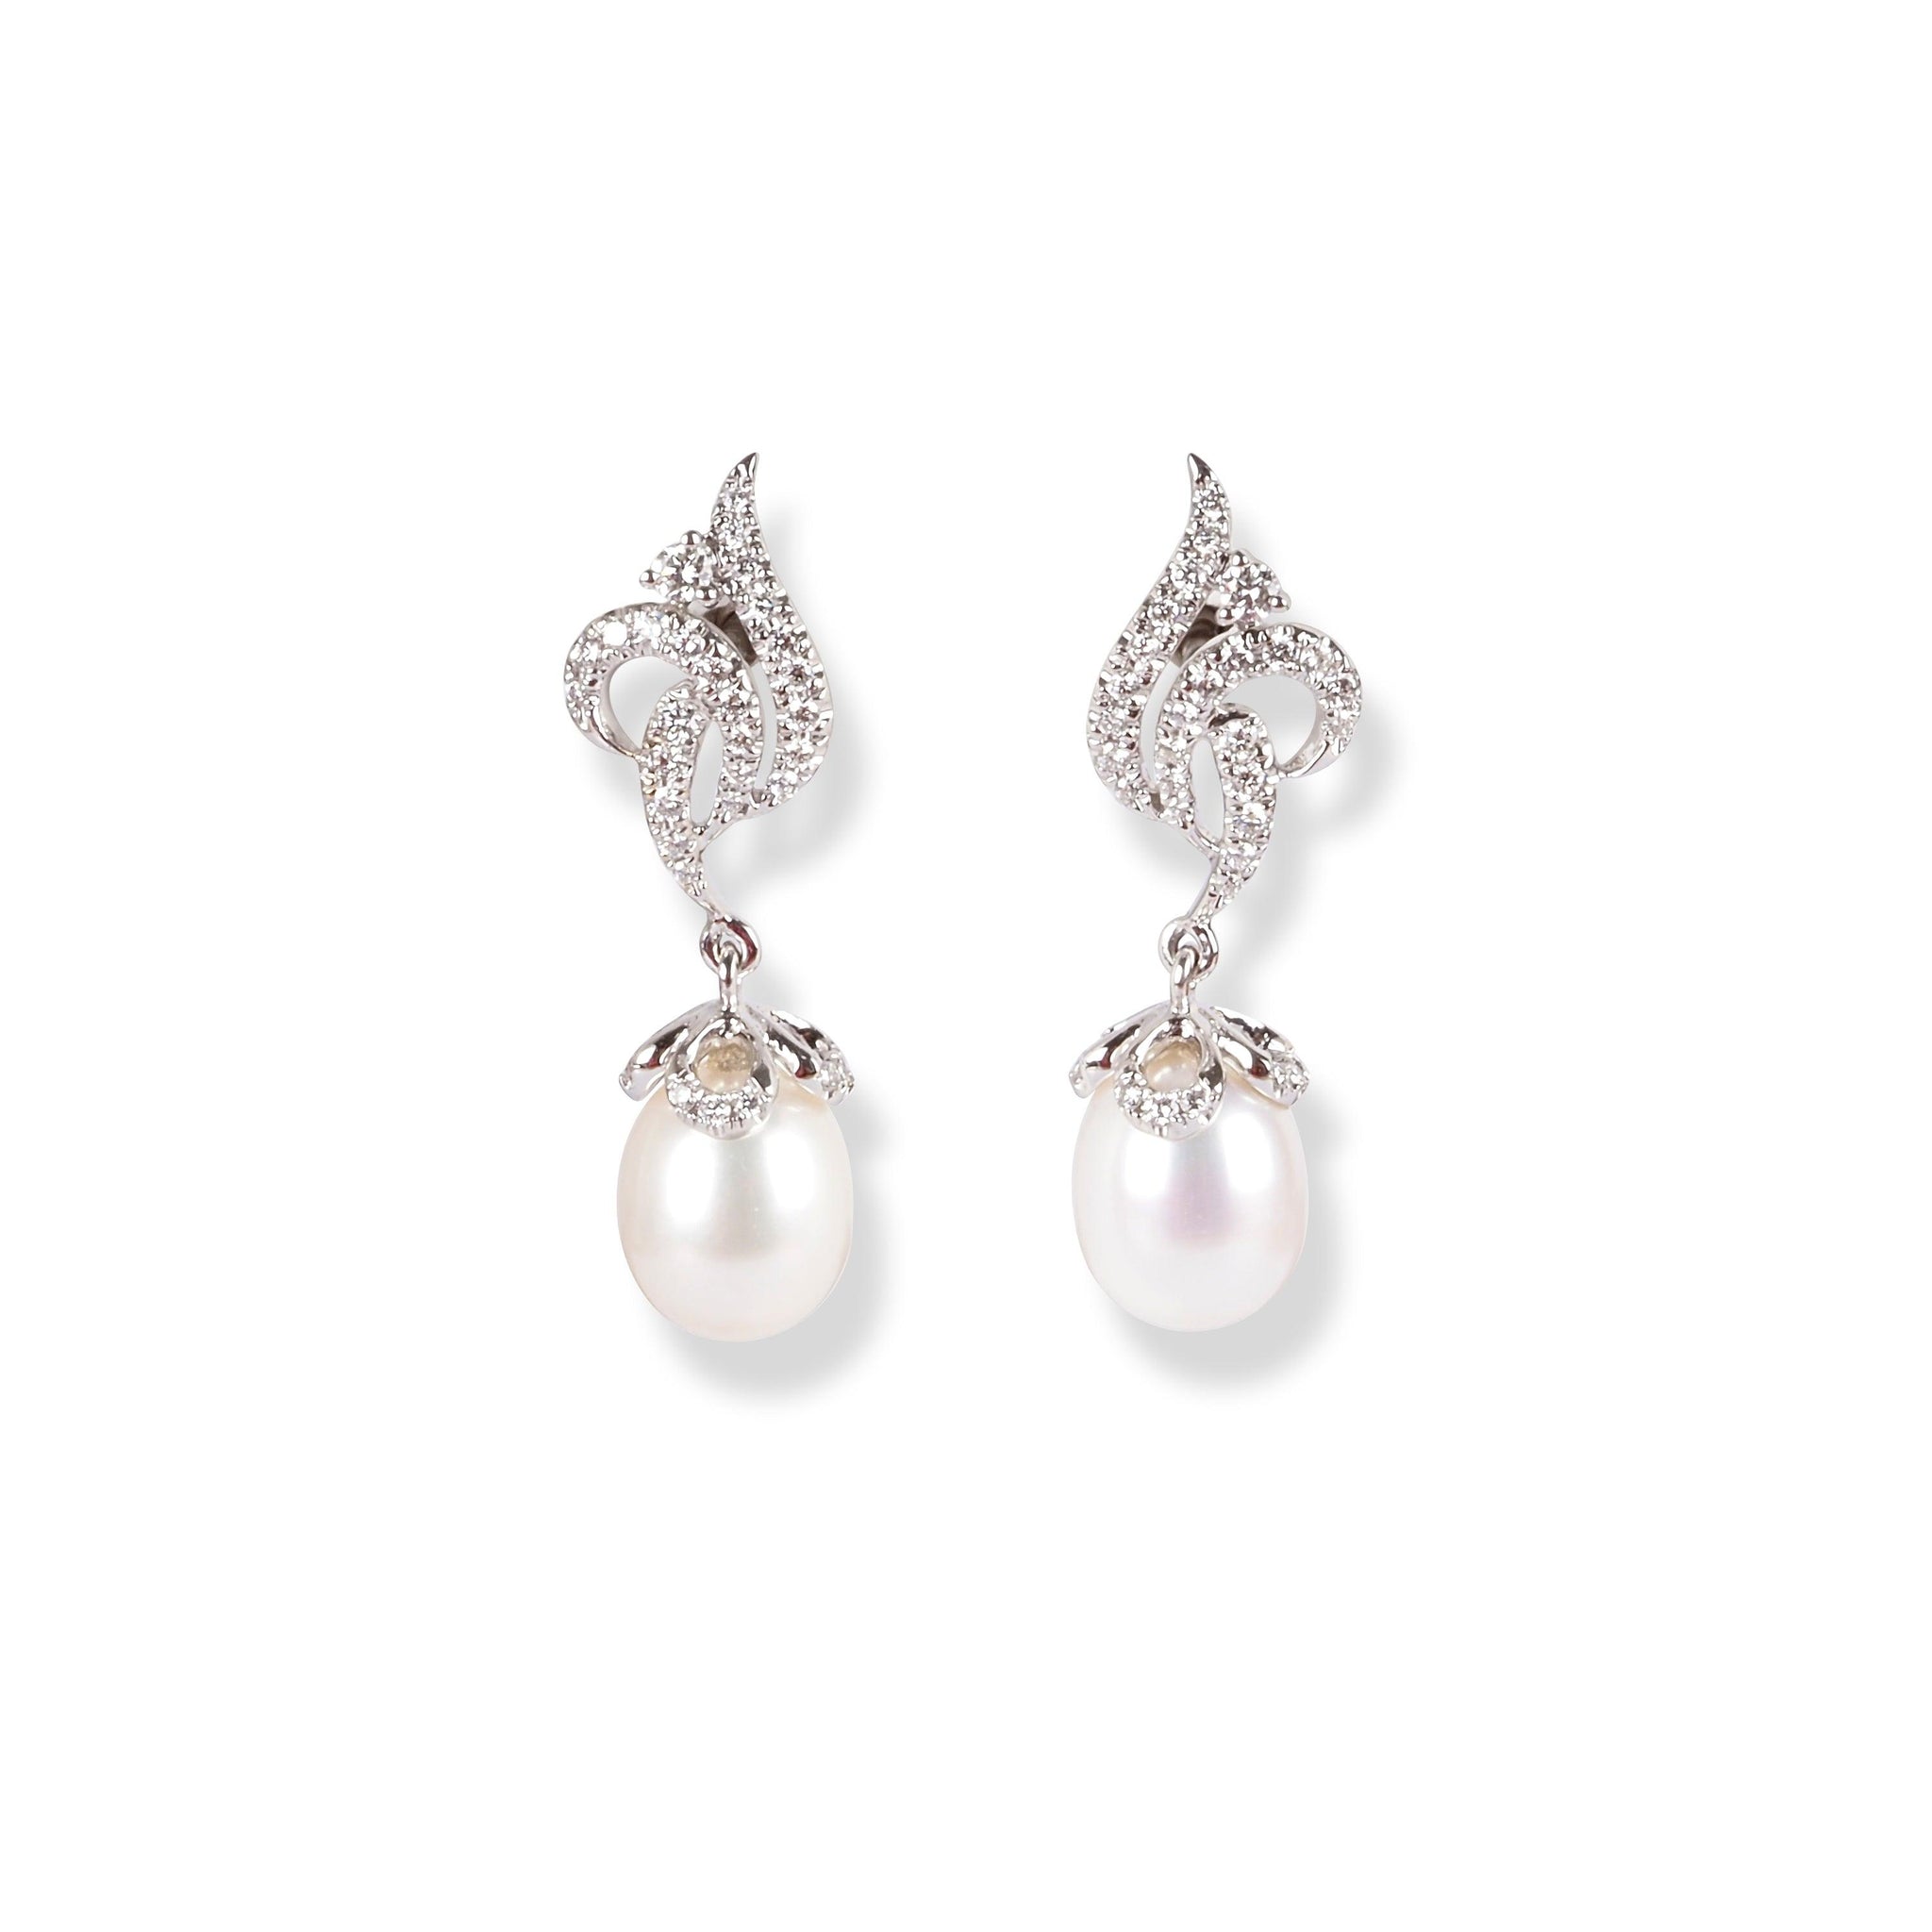 18ct White Gold Diamond & Cultured Pearl Drop Set (Pendant + Chain + Earrings) MCS6066/7